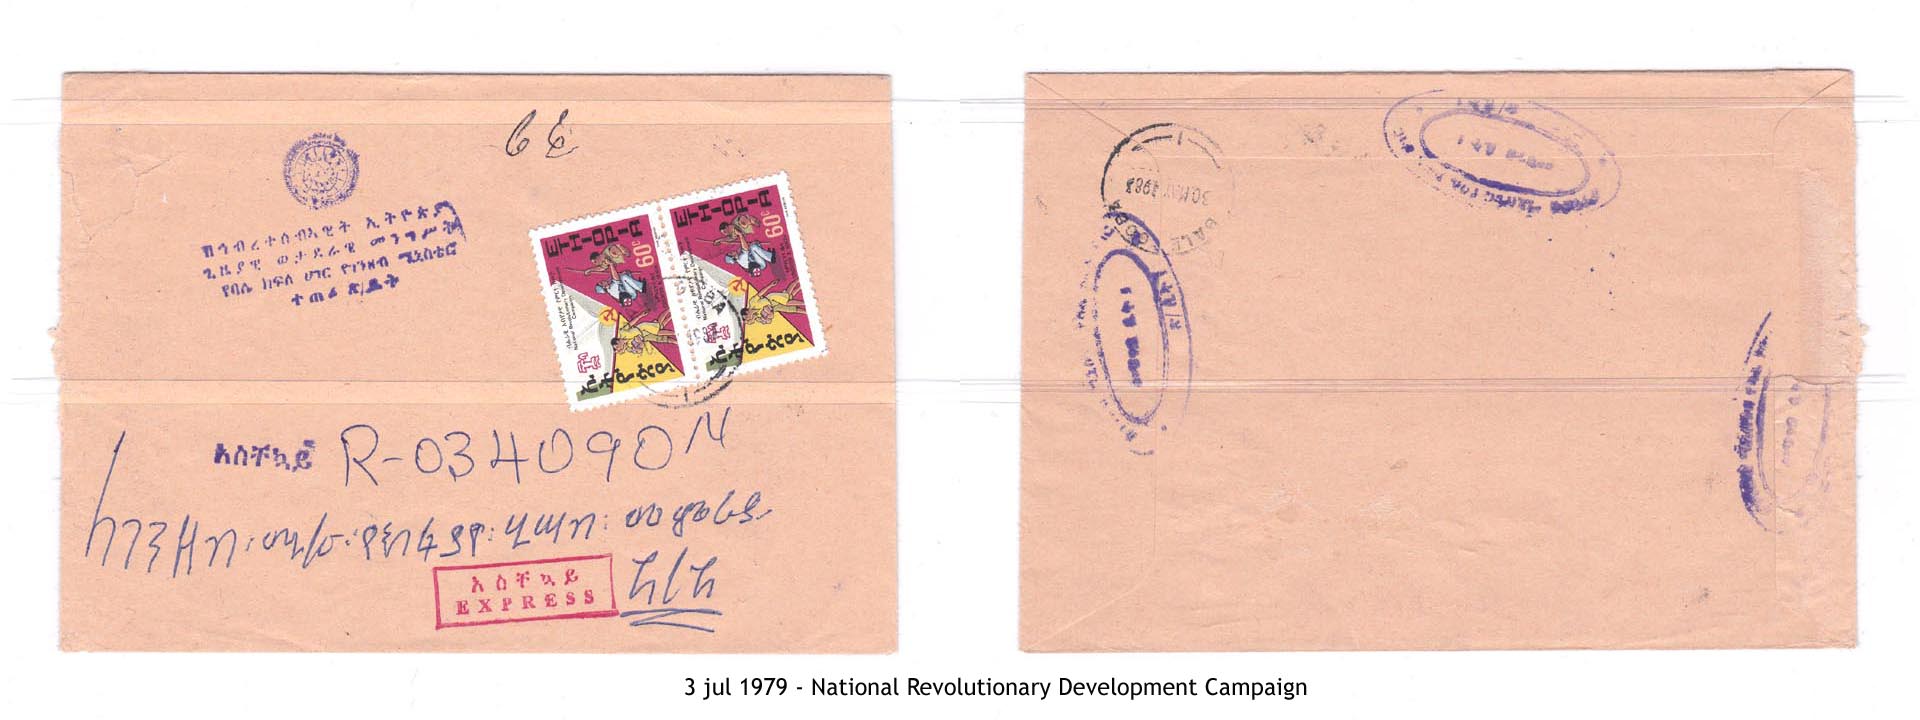 19790703 - National Revolutionary Development Campaign z